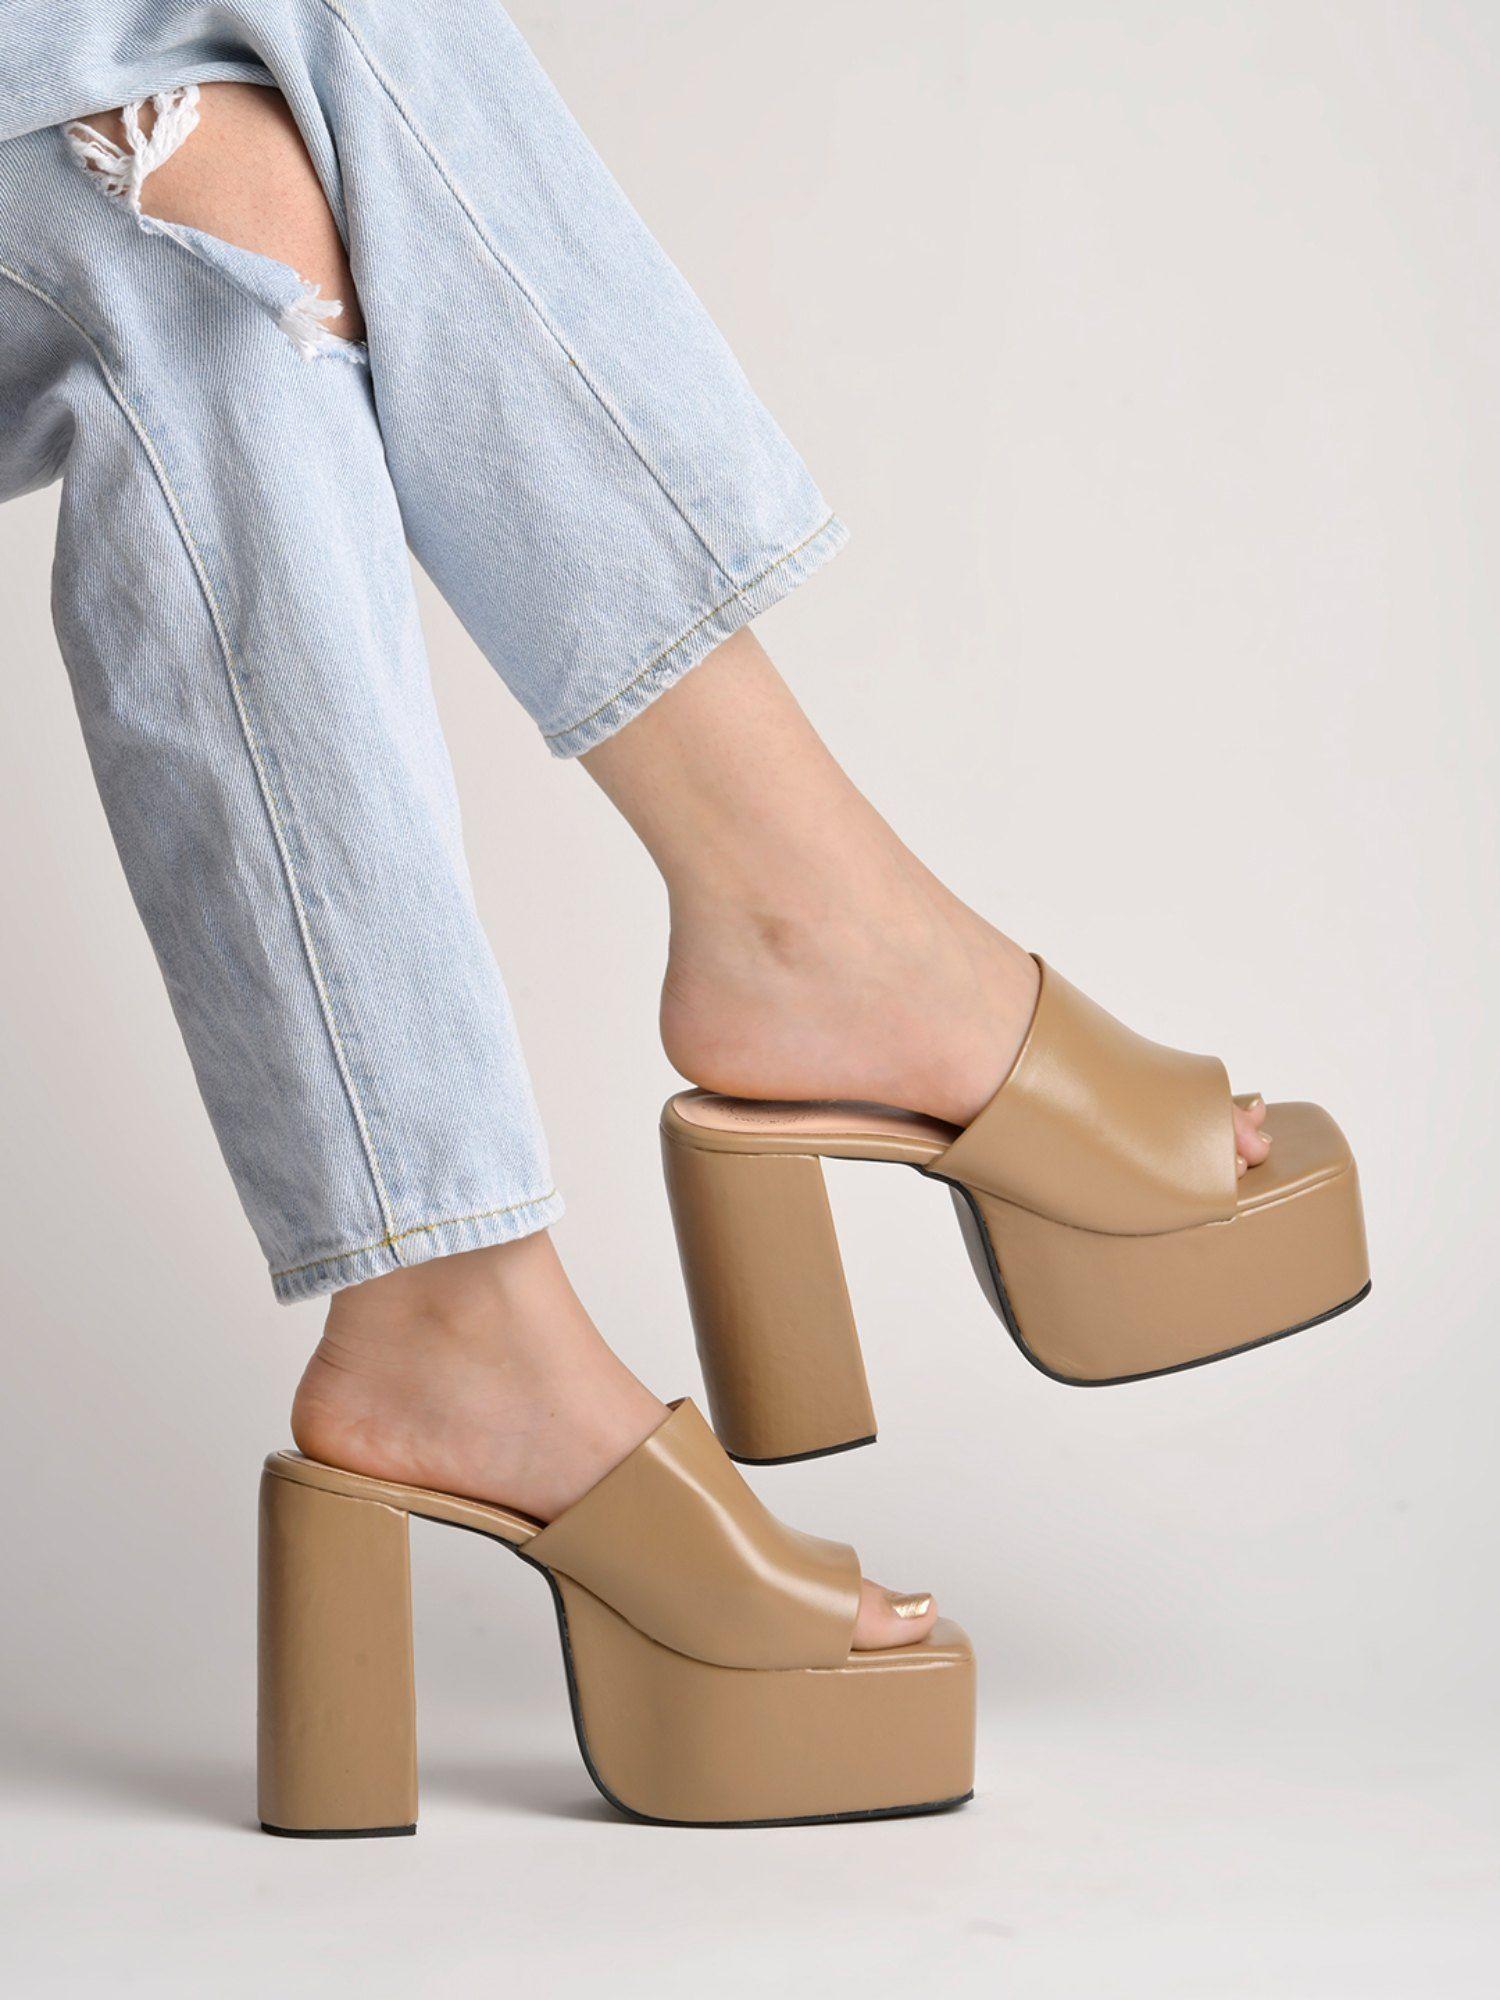 stylish solid beige block heels for girls